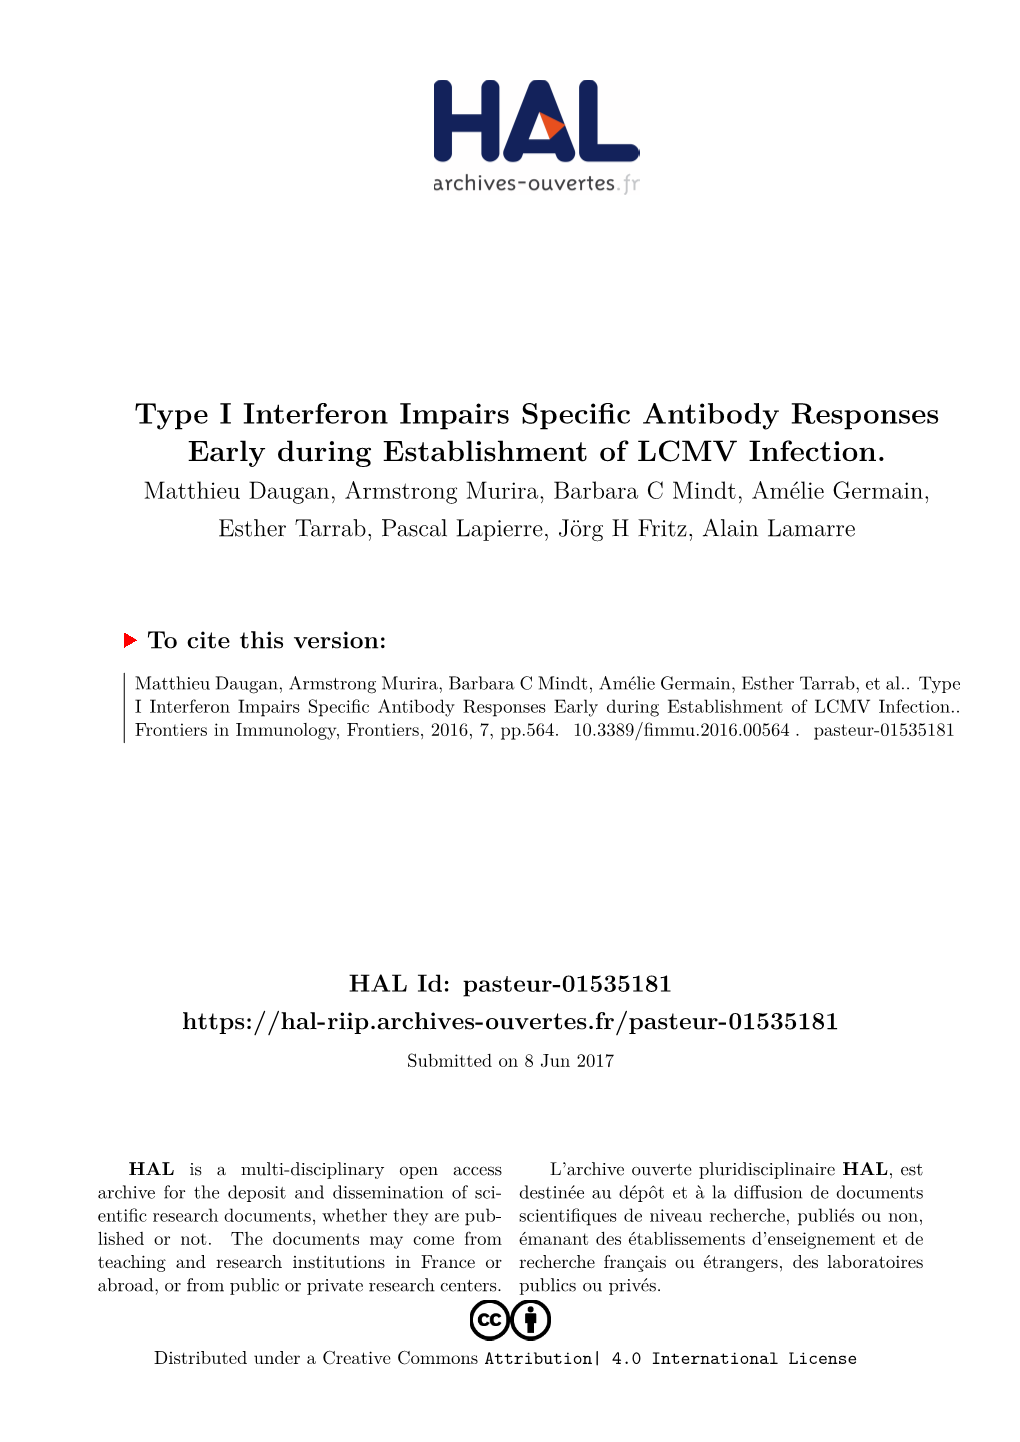 Type I Interferon Impairs Specific Antibody Responses Early During Establishment of LCMV Infection